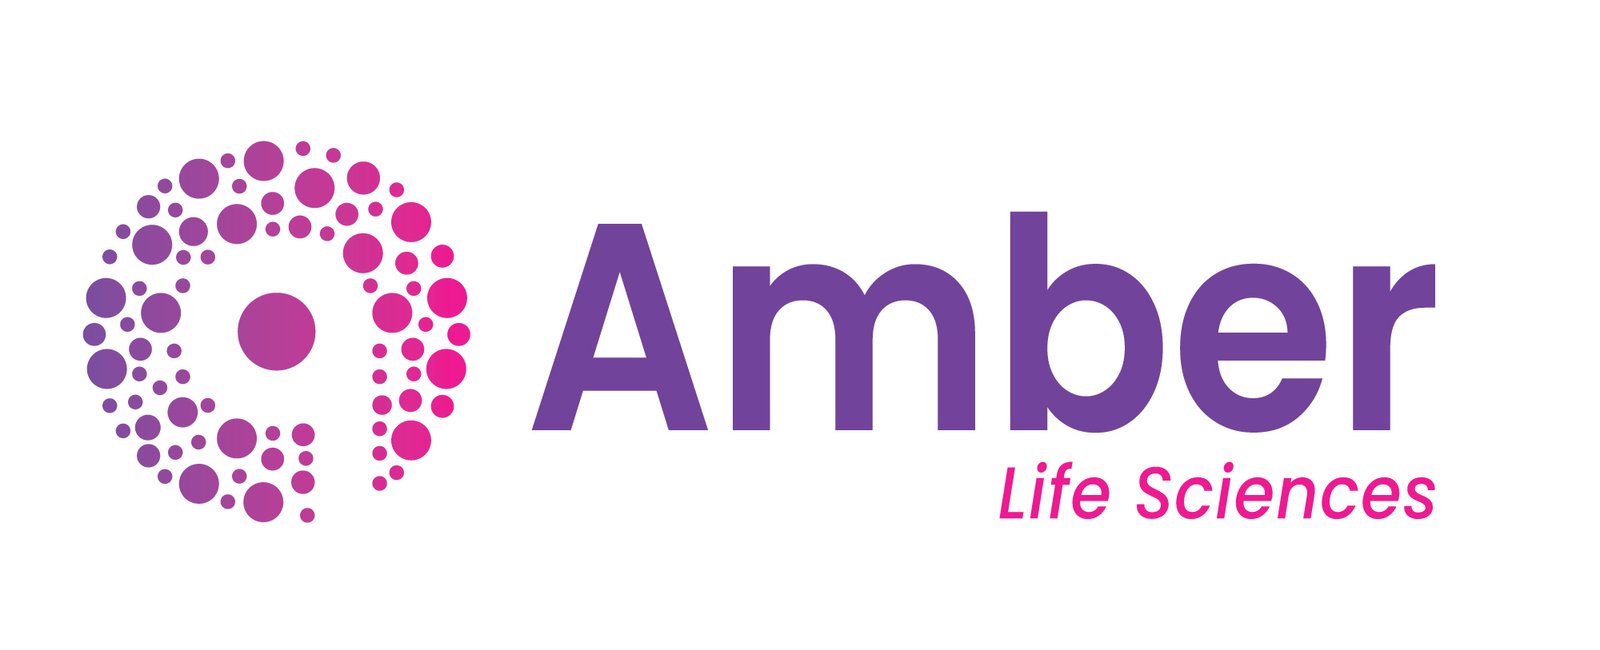 Premium Generic Medications at Low-cost Amber Lifesciences